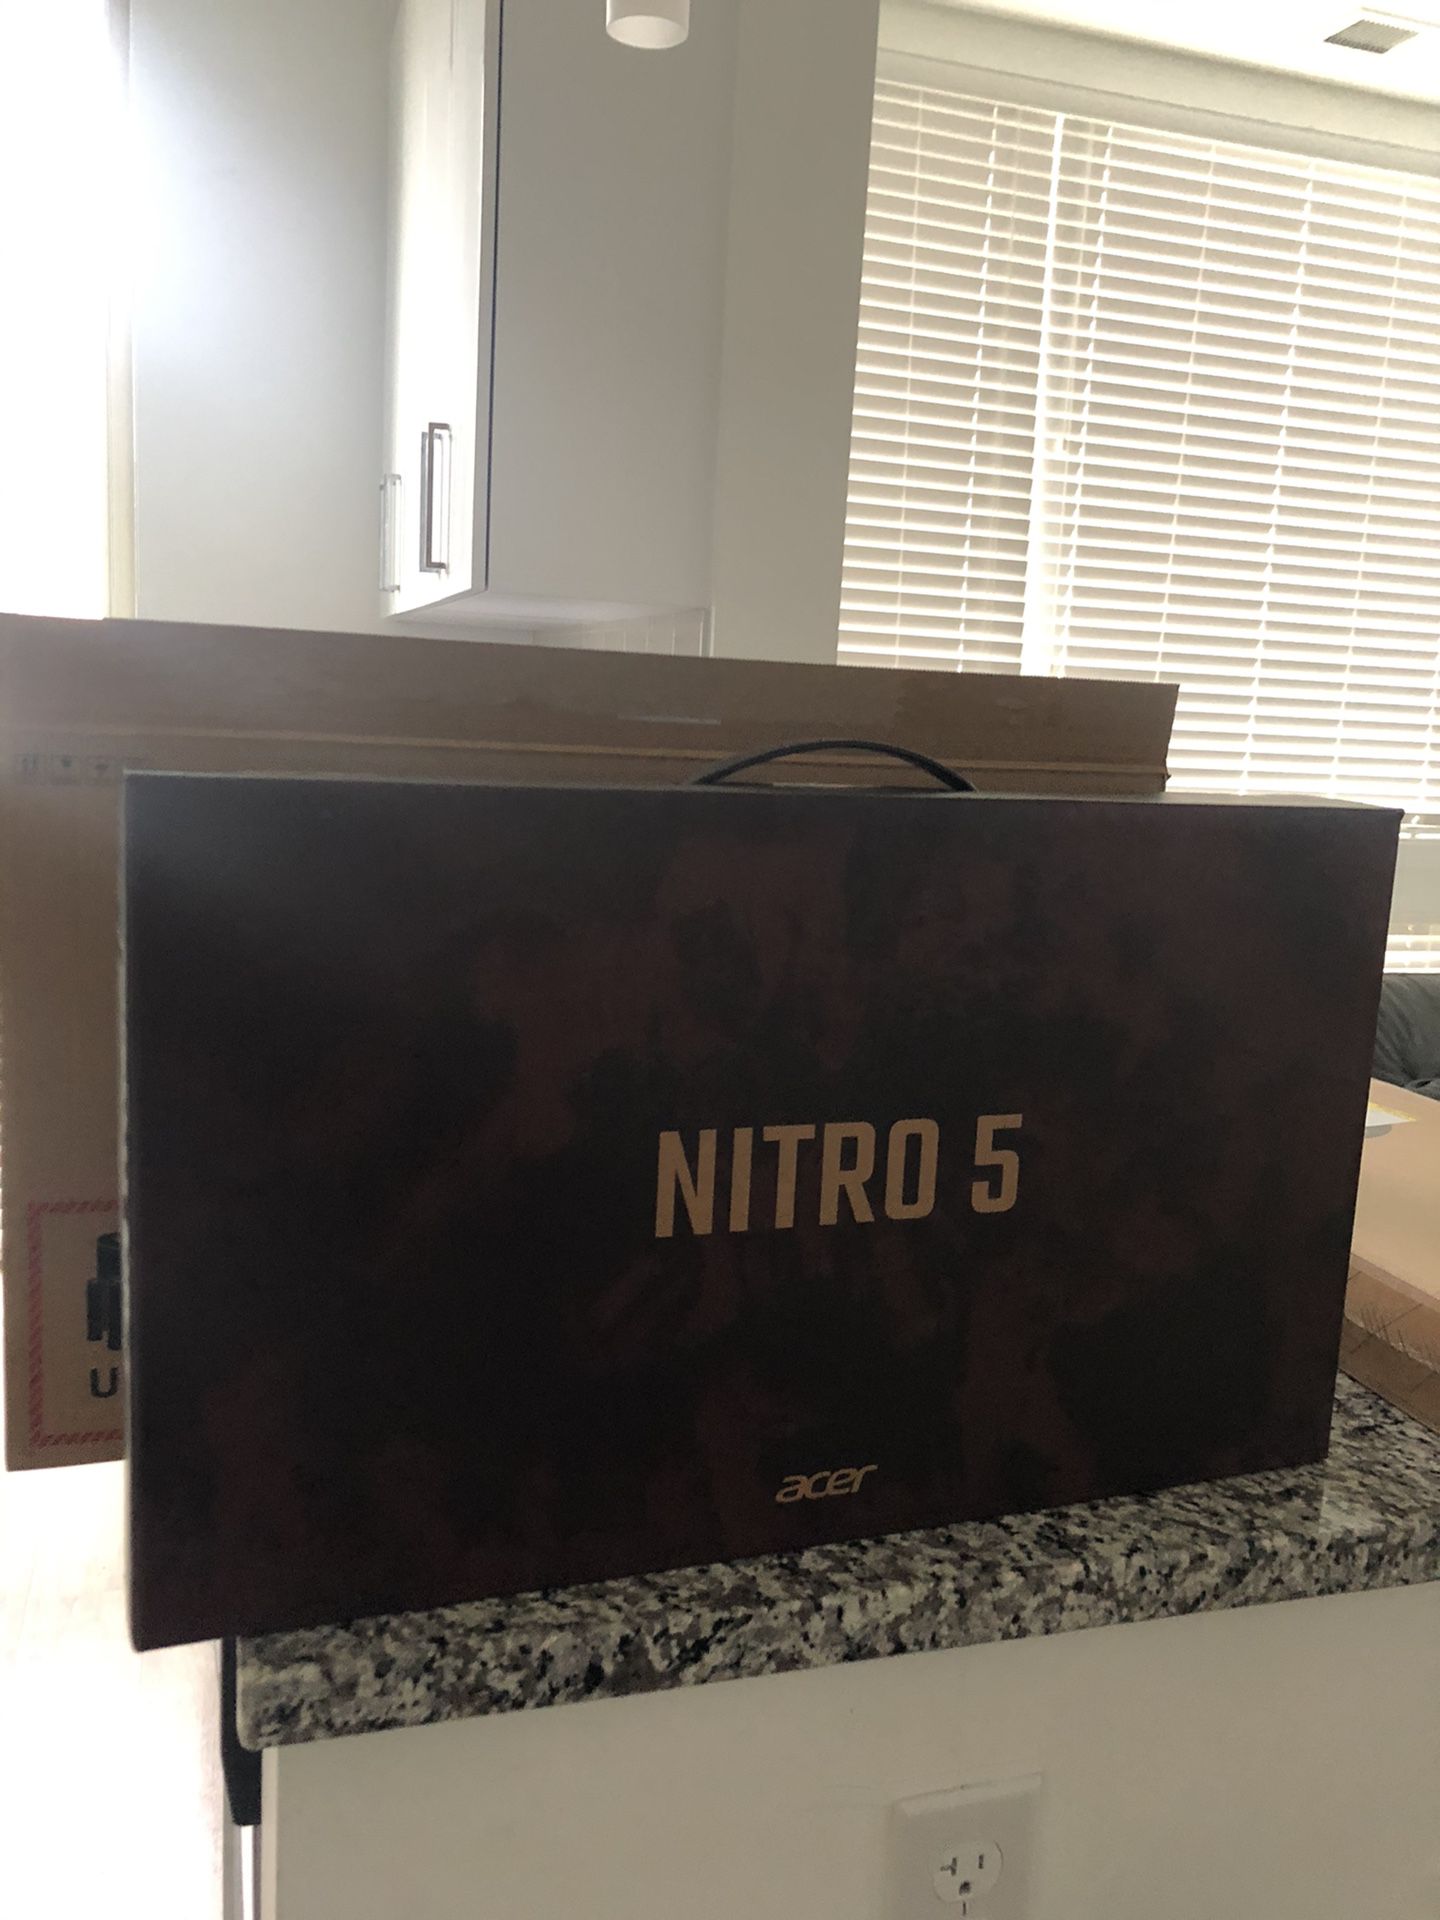 ACER NITRO 5 LAPTOP (New)